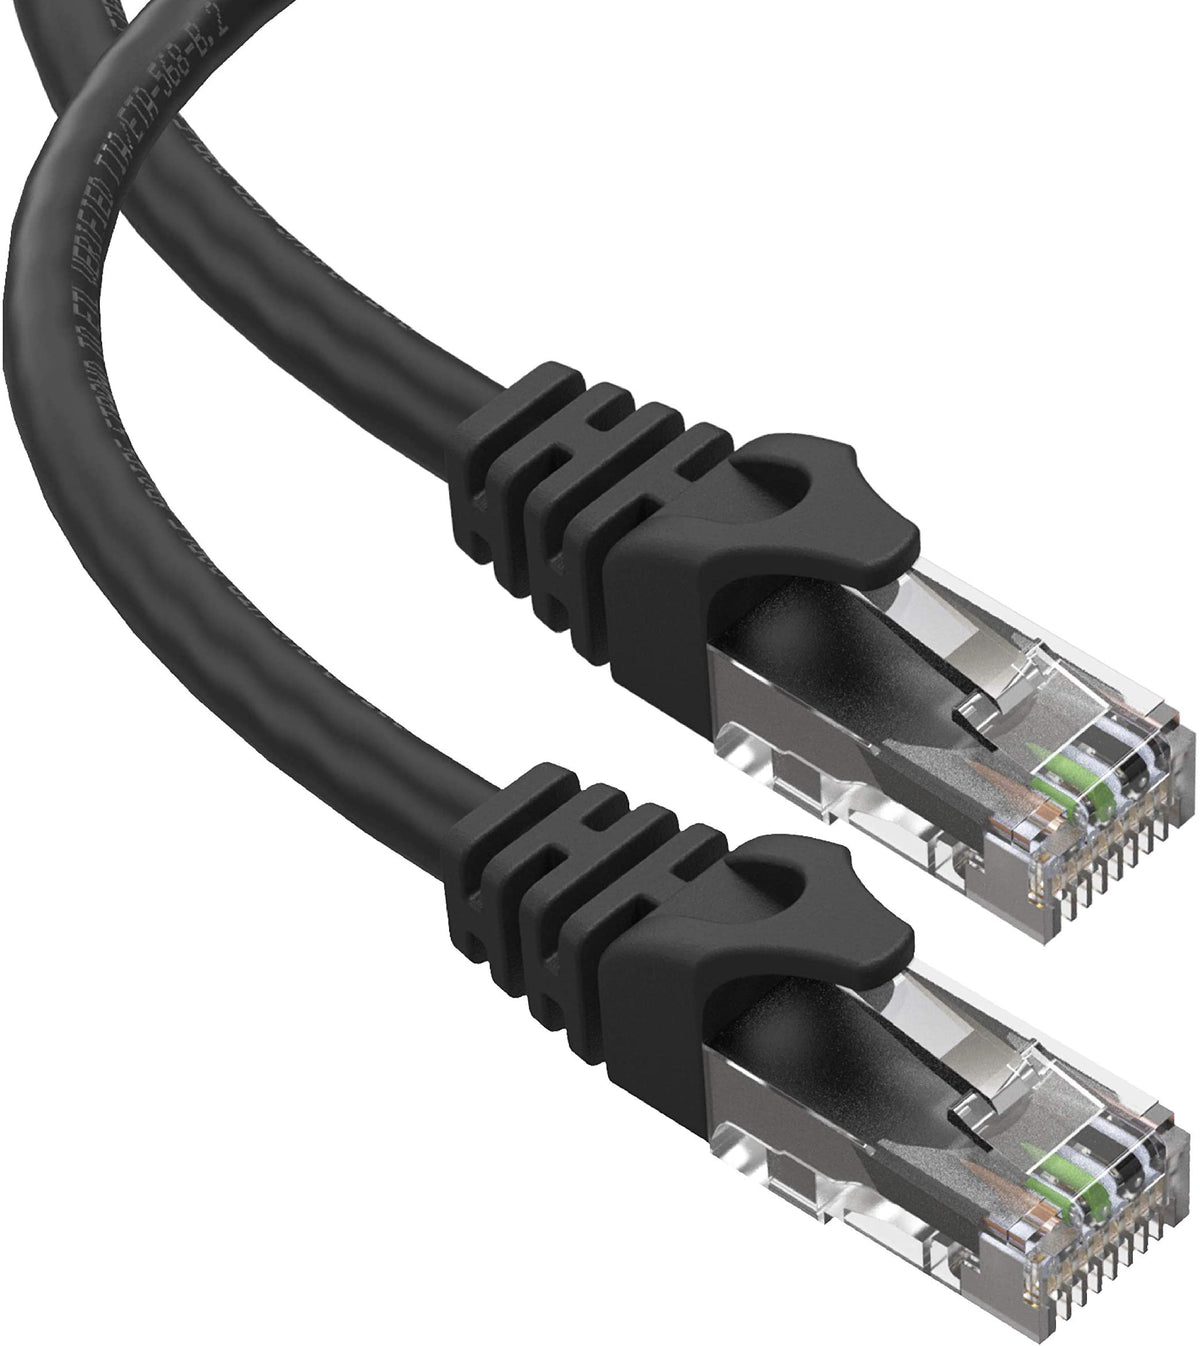 Cat 5 E 20 foot Ethernet Cable- Black